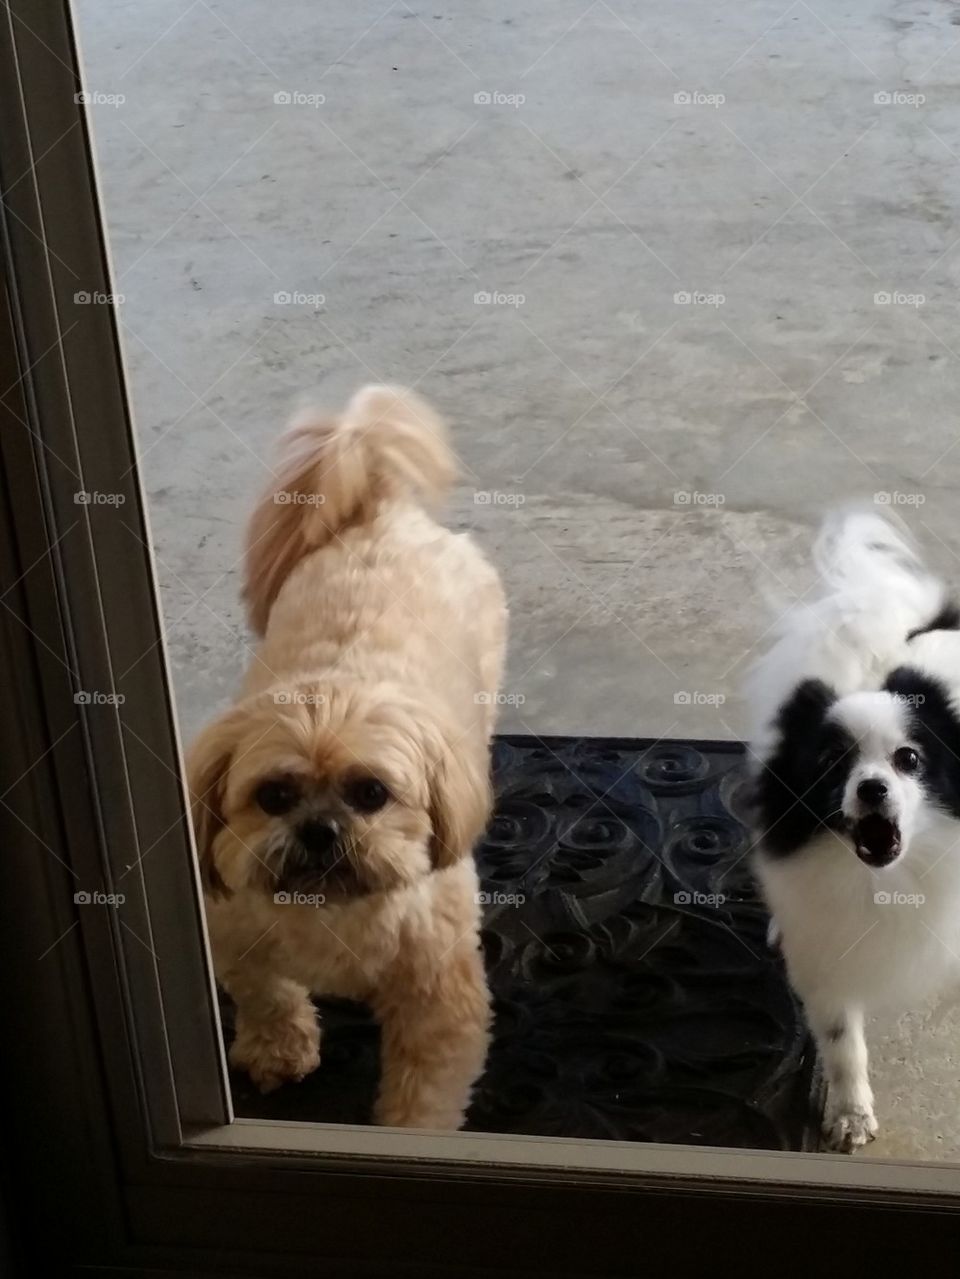 Please let us in!